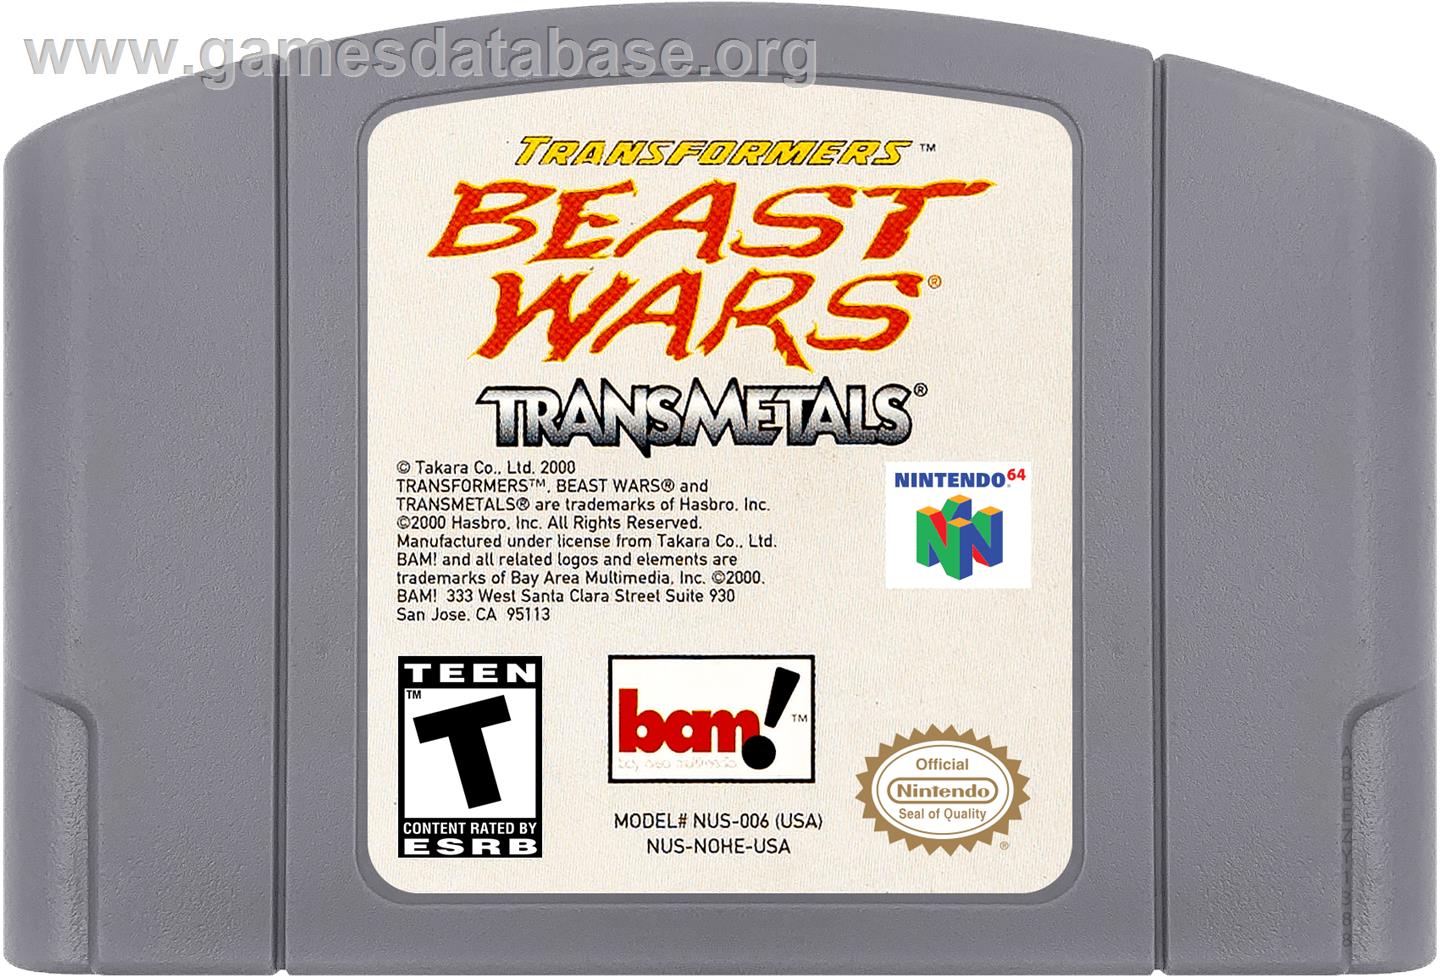 Transformers: Beast Wars Transmetals - Nintendo N64 - Artwork - Cartridge